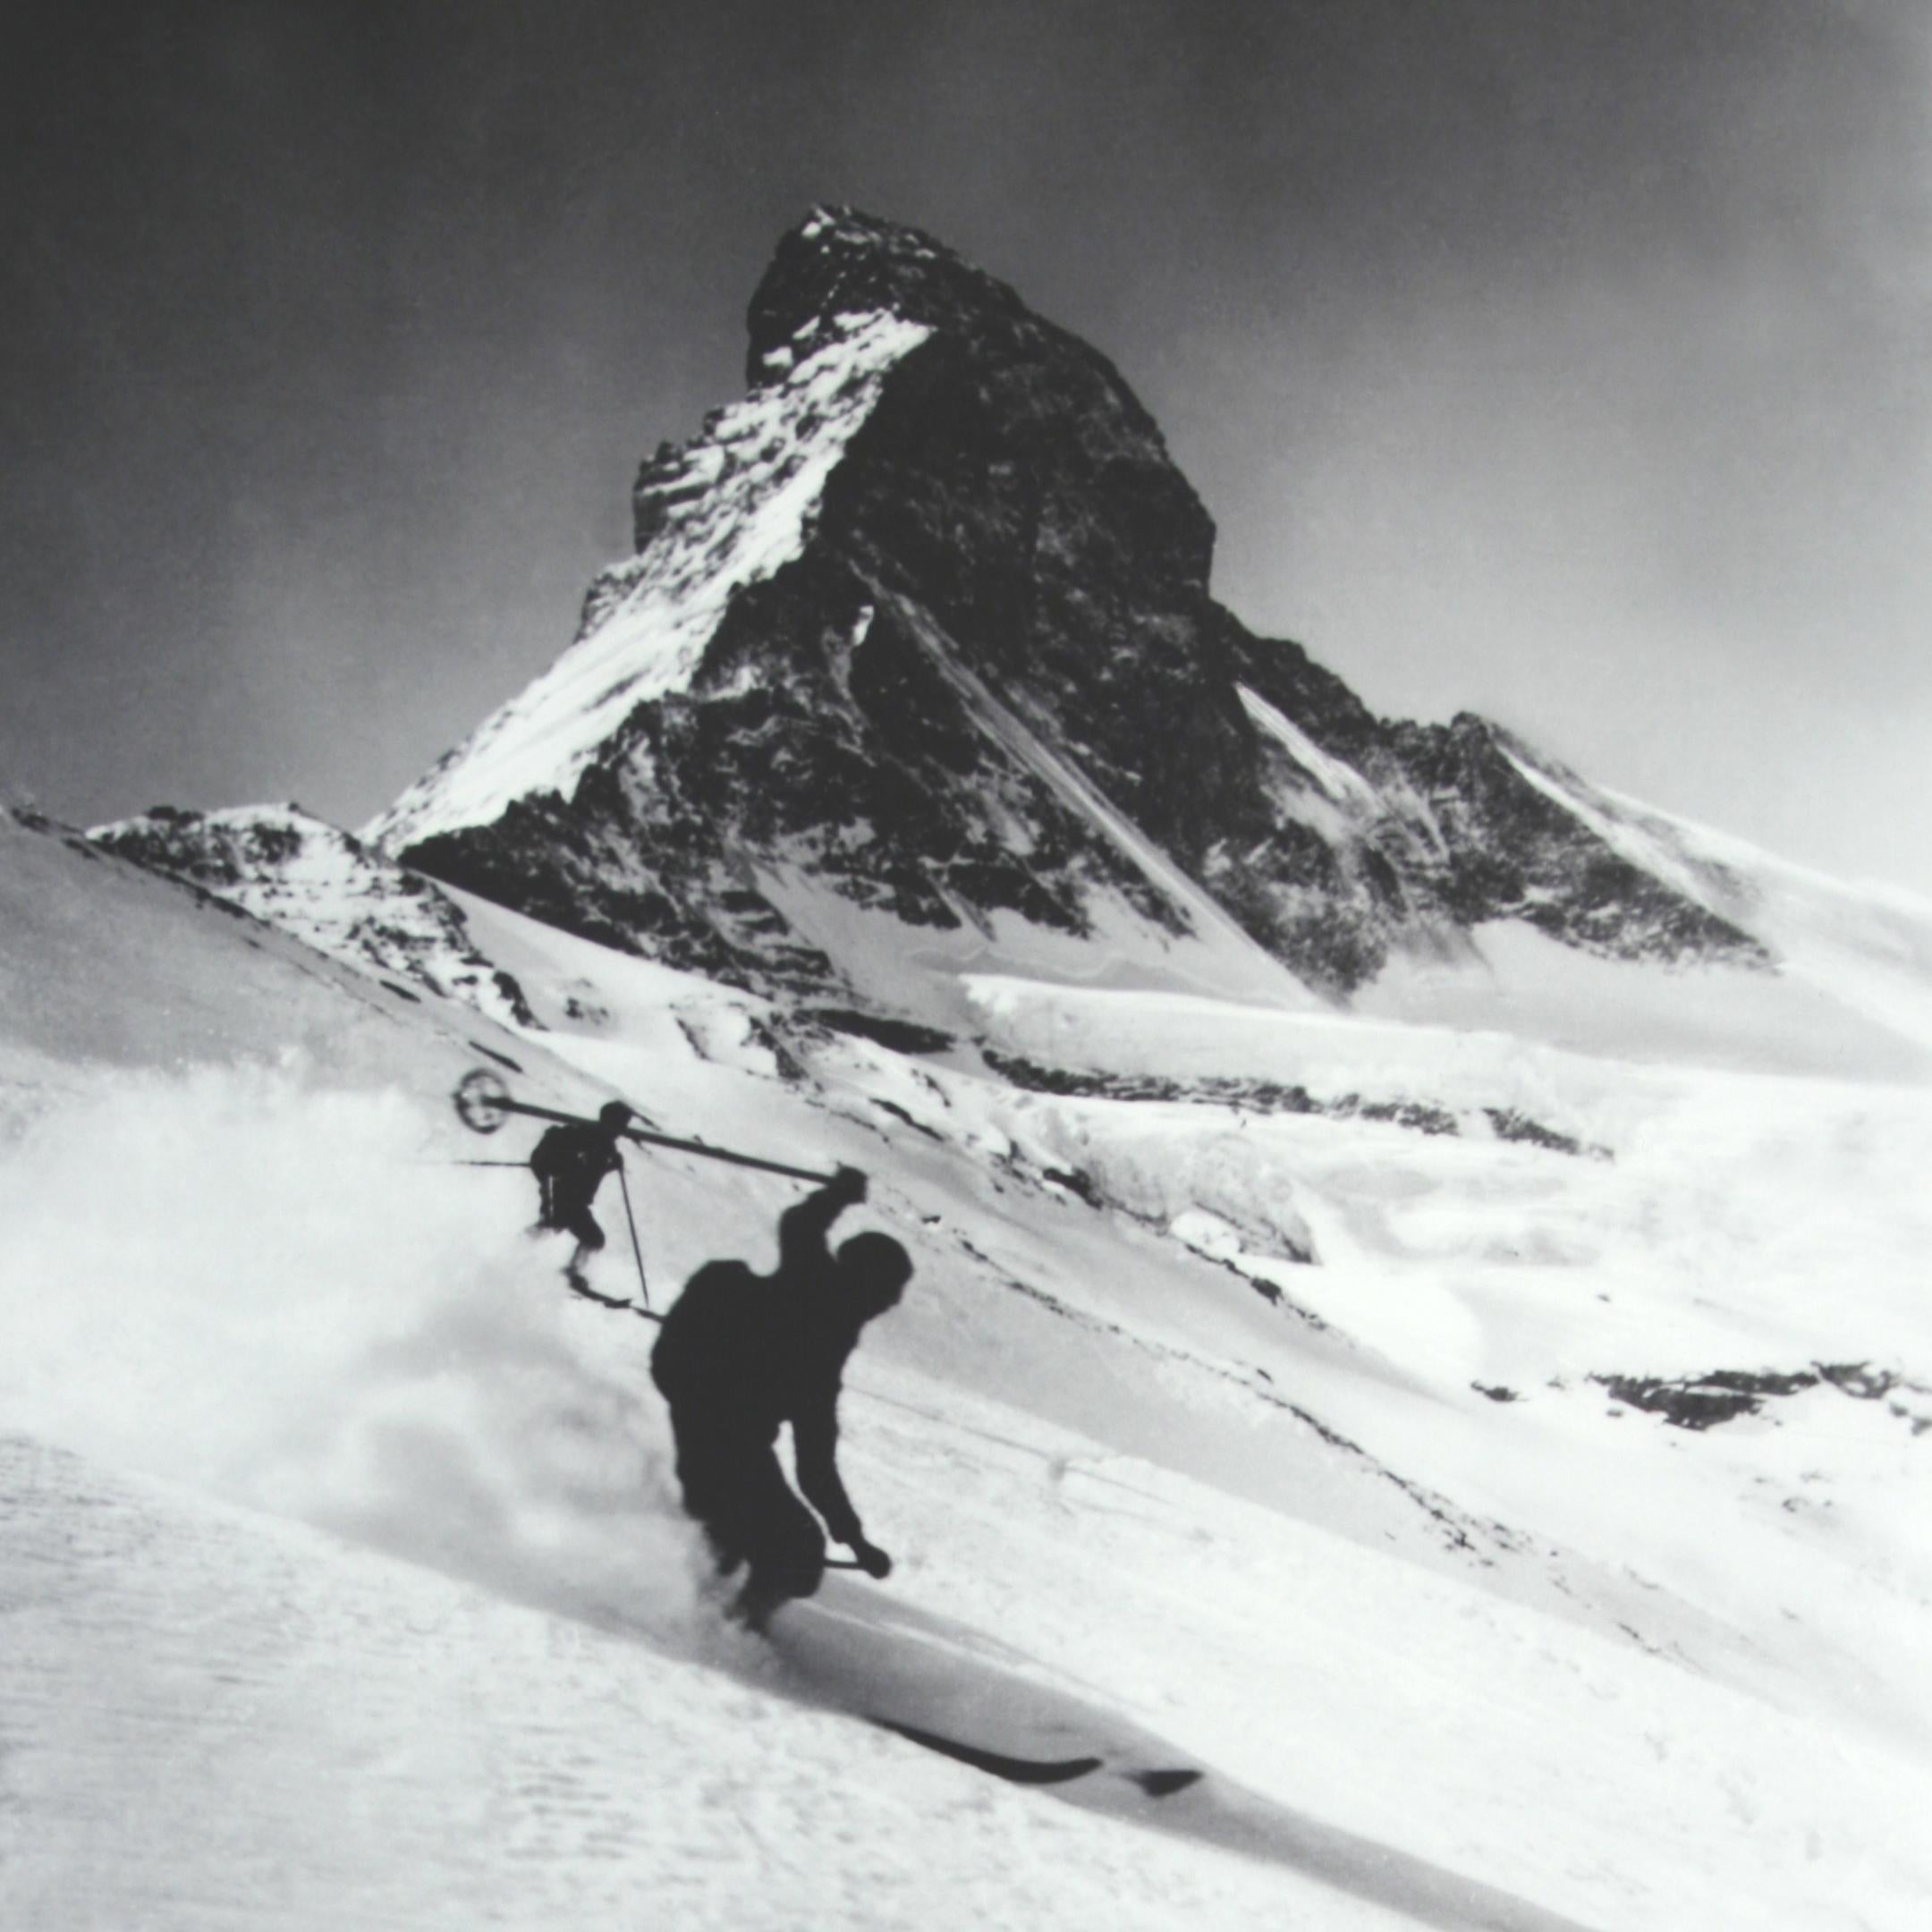 English Alpine Ski Photograph 'Matterhorn & Skiers', Taken from Original 1930s Photo For Sale